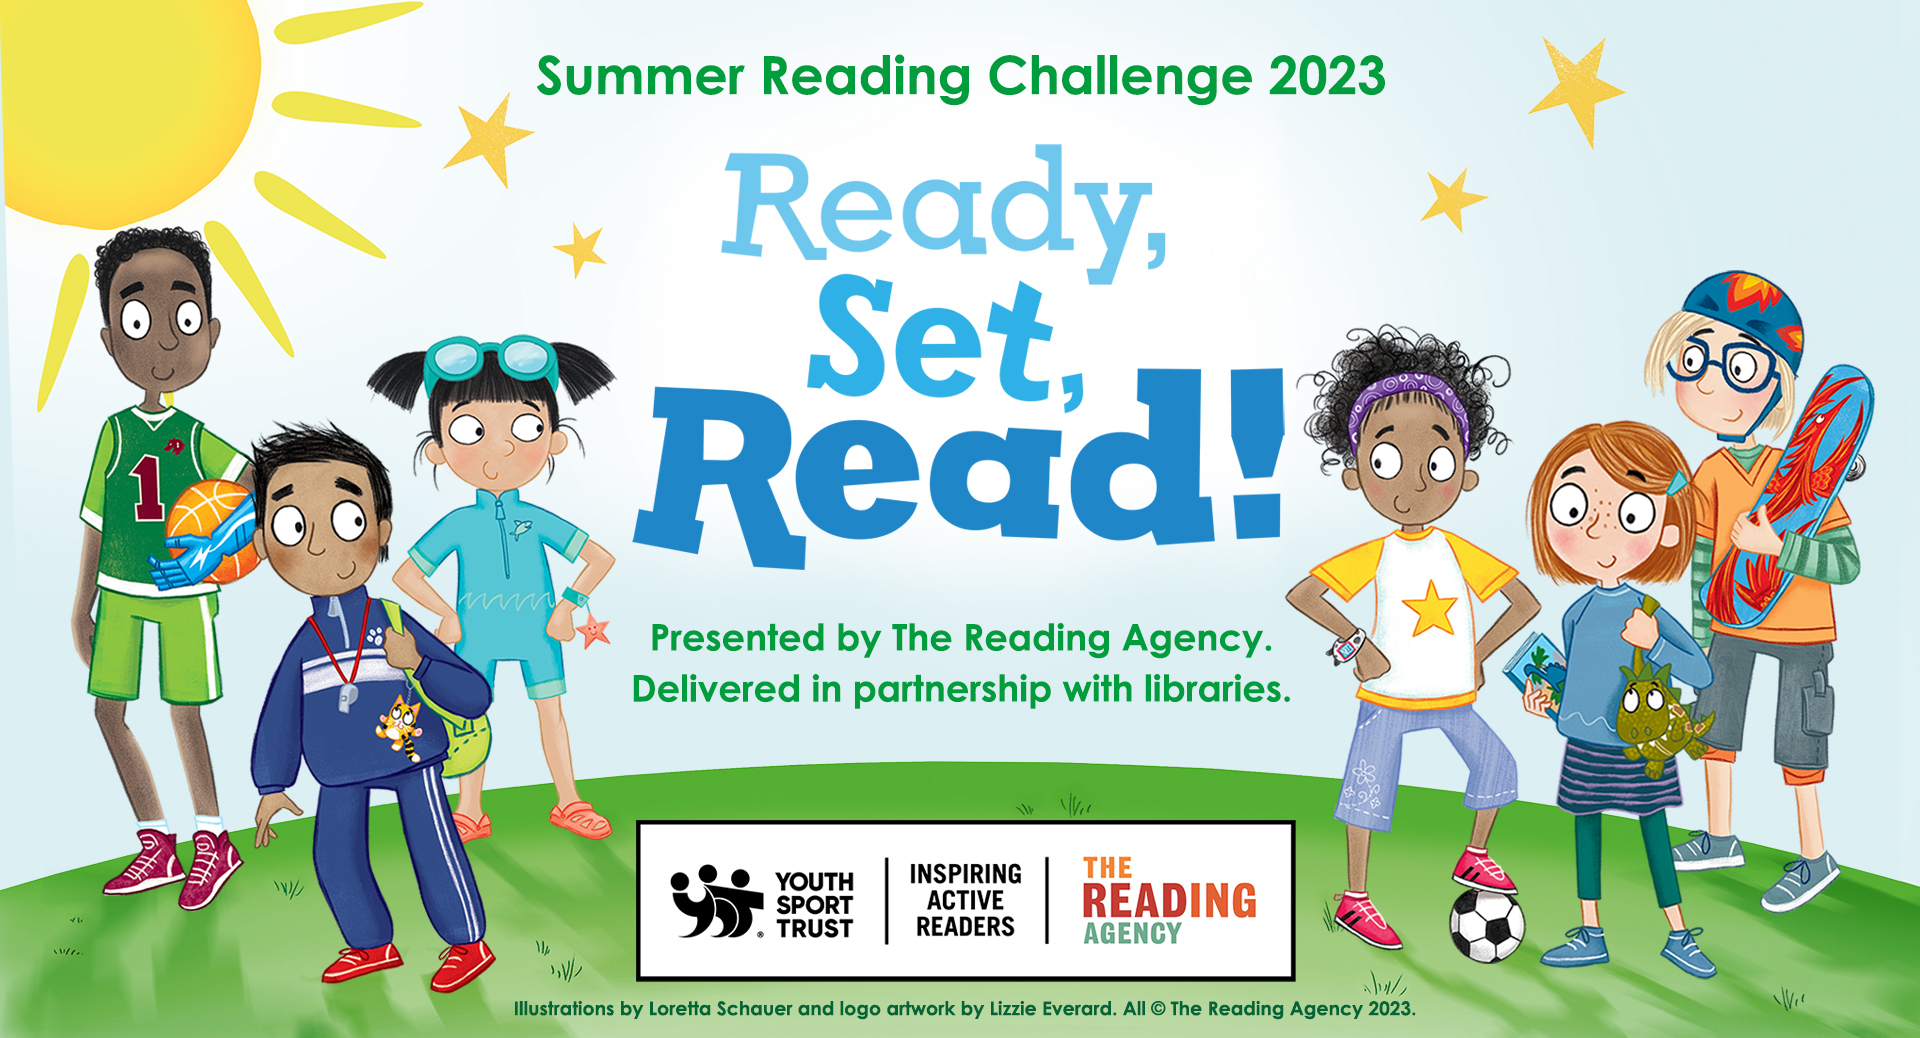 Summer Reading Challenge 2023 poster